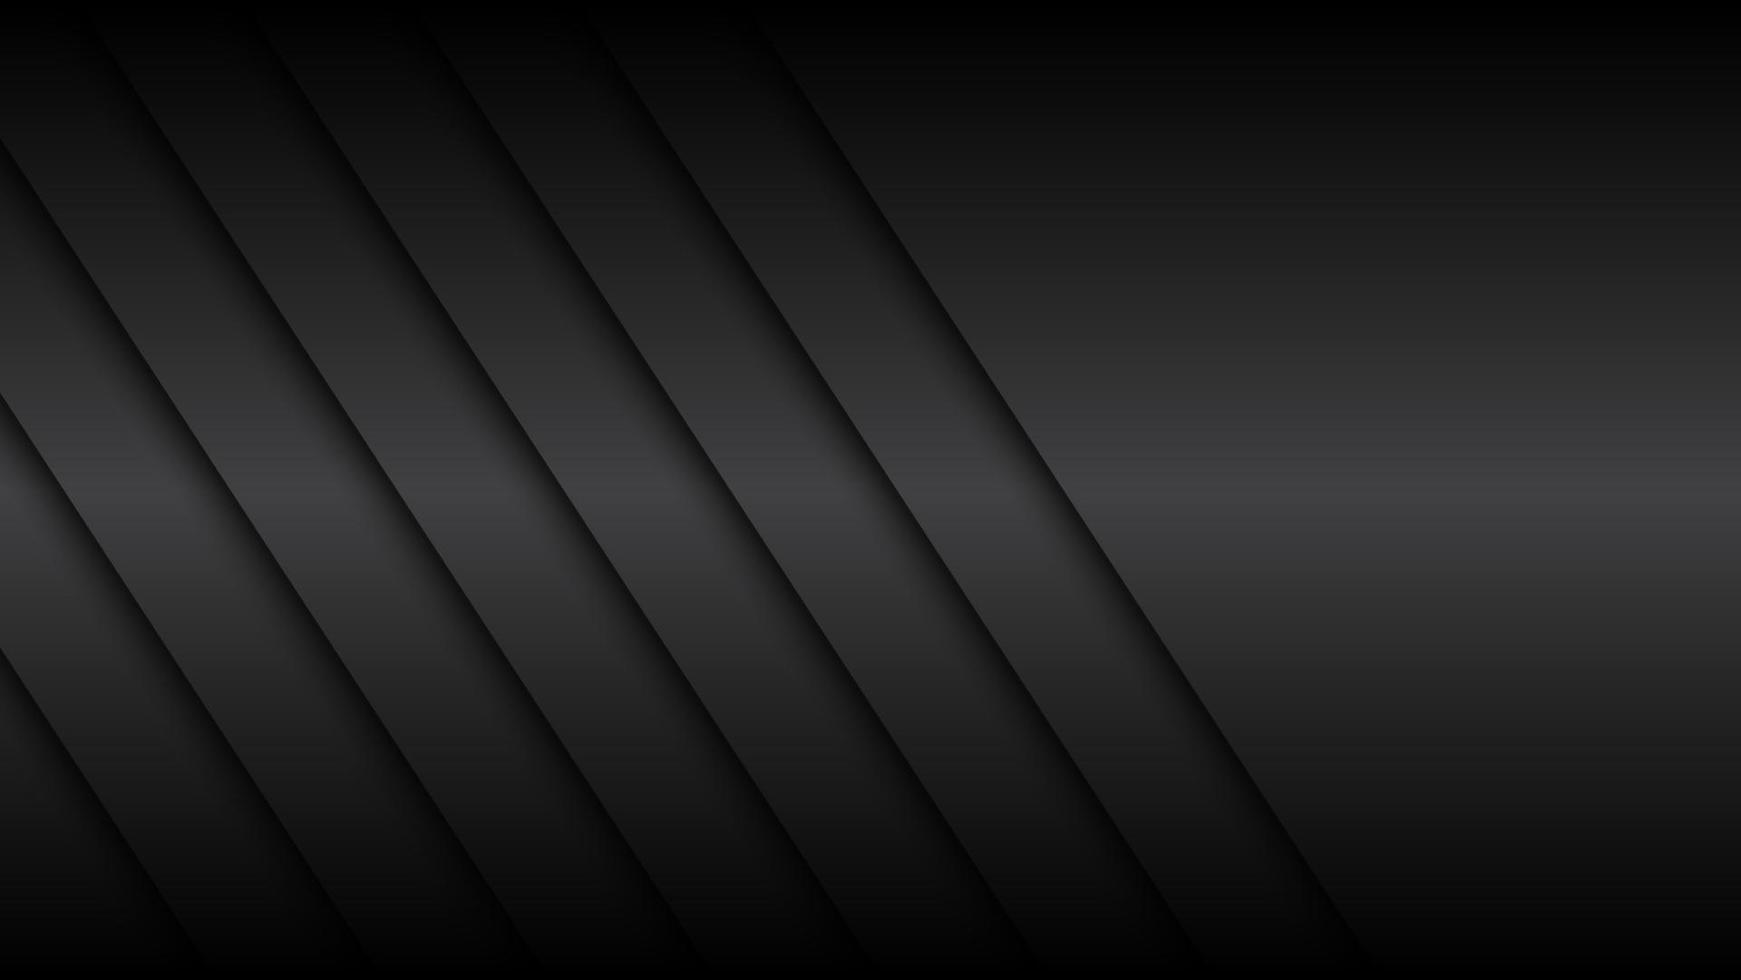 Fondo de diseño de material negro con sombras diagonales, ilustración de vector de pantalla panorámica abstracta moderna